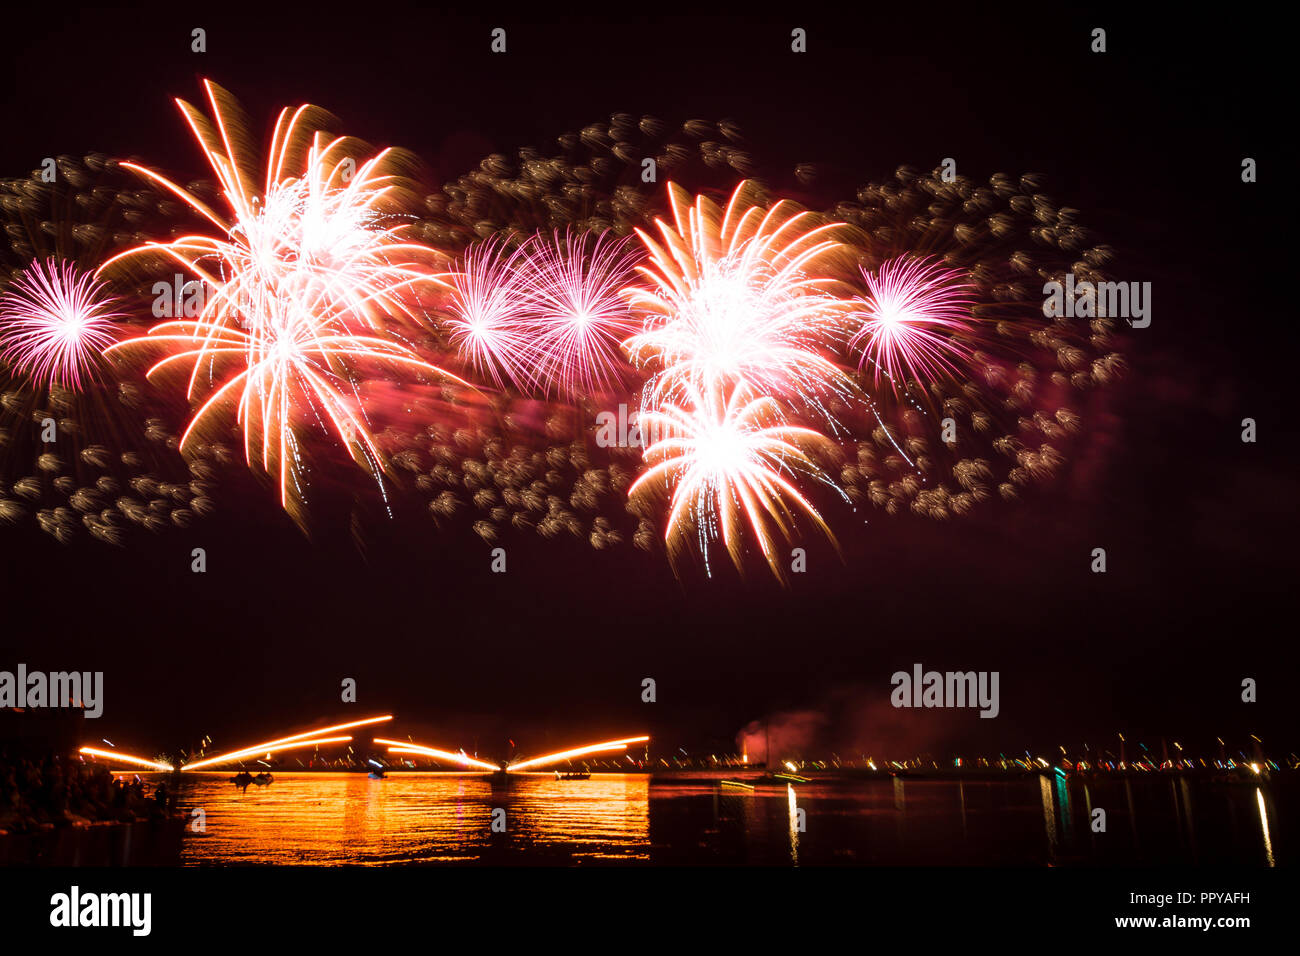 Giant purple firework celebration at a lake Stock Photo